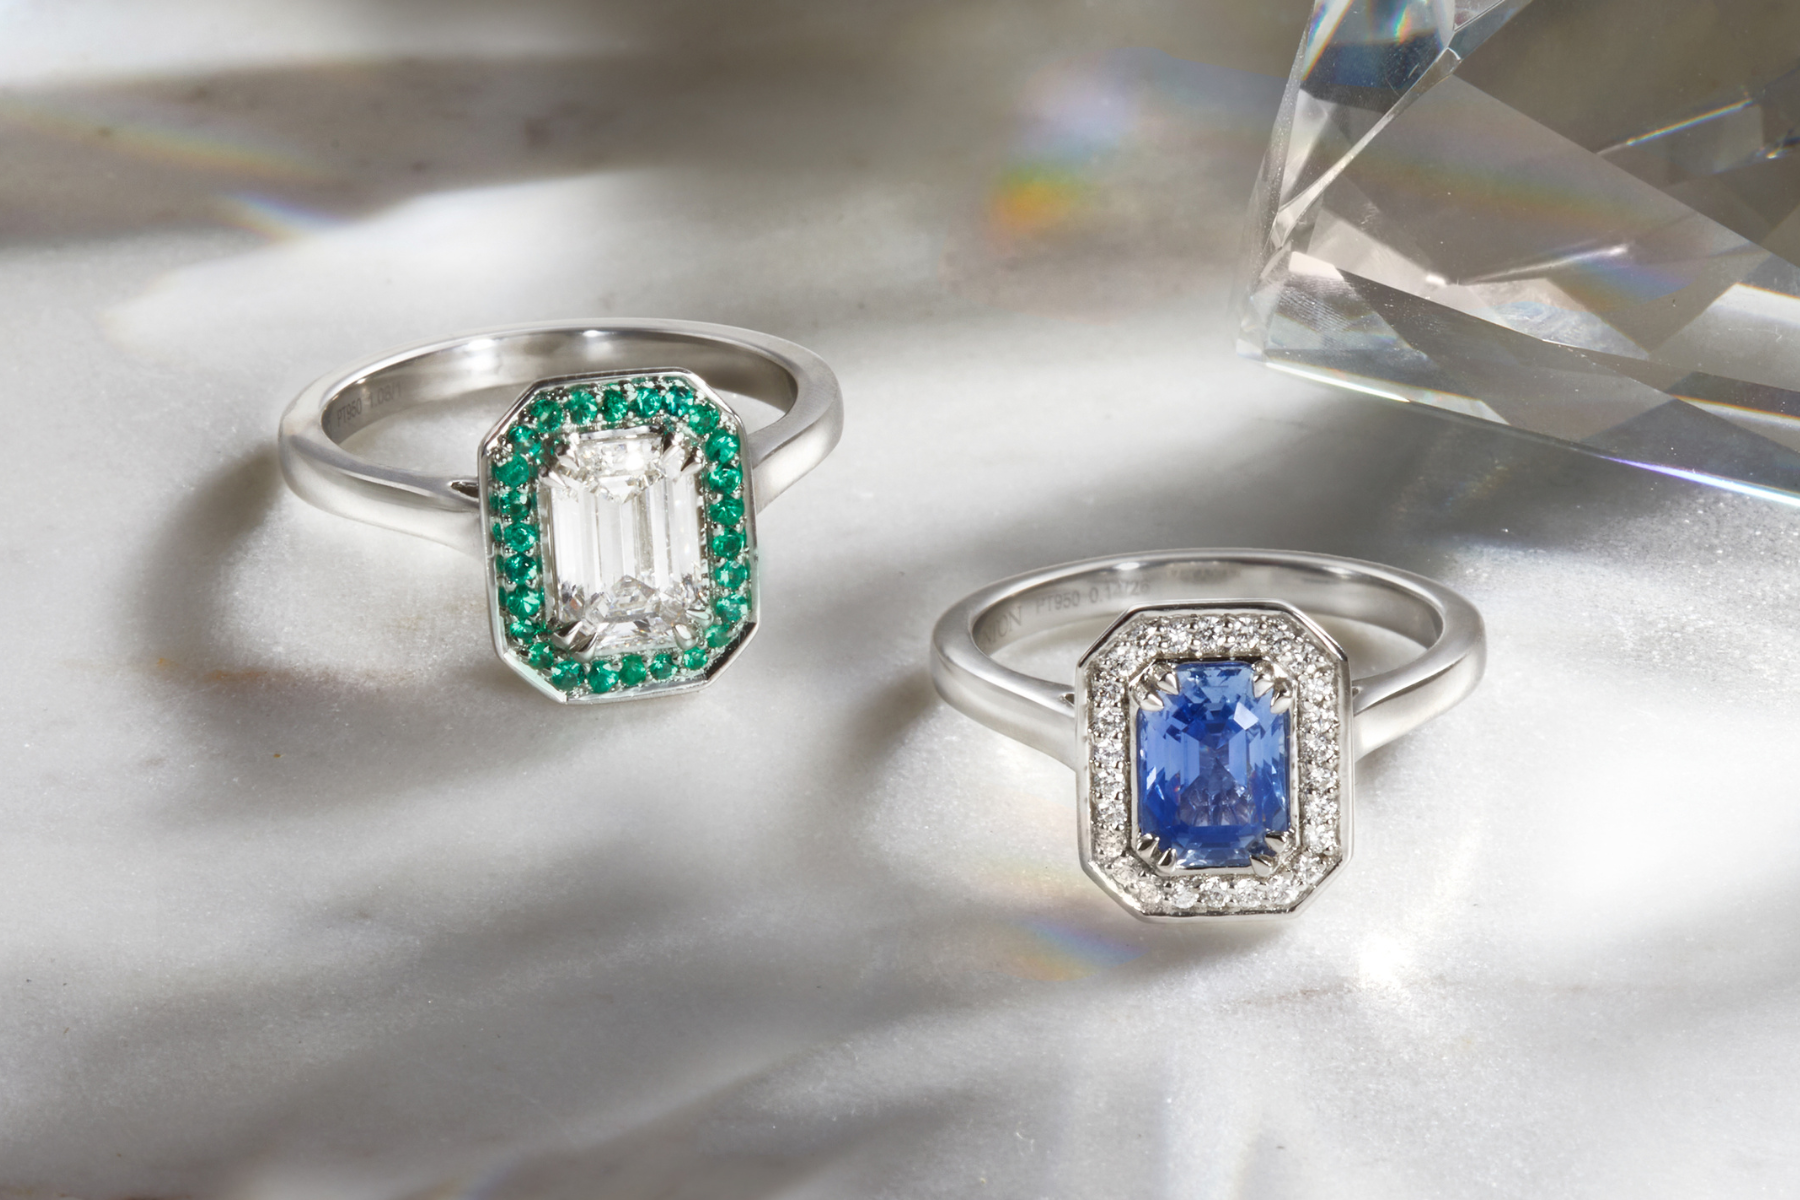 Fenton Solar Diamond vs Blue Sapphire Gemstone ring comparison